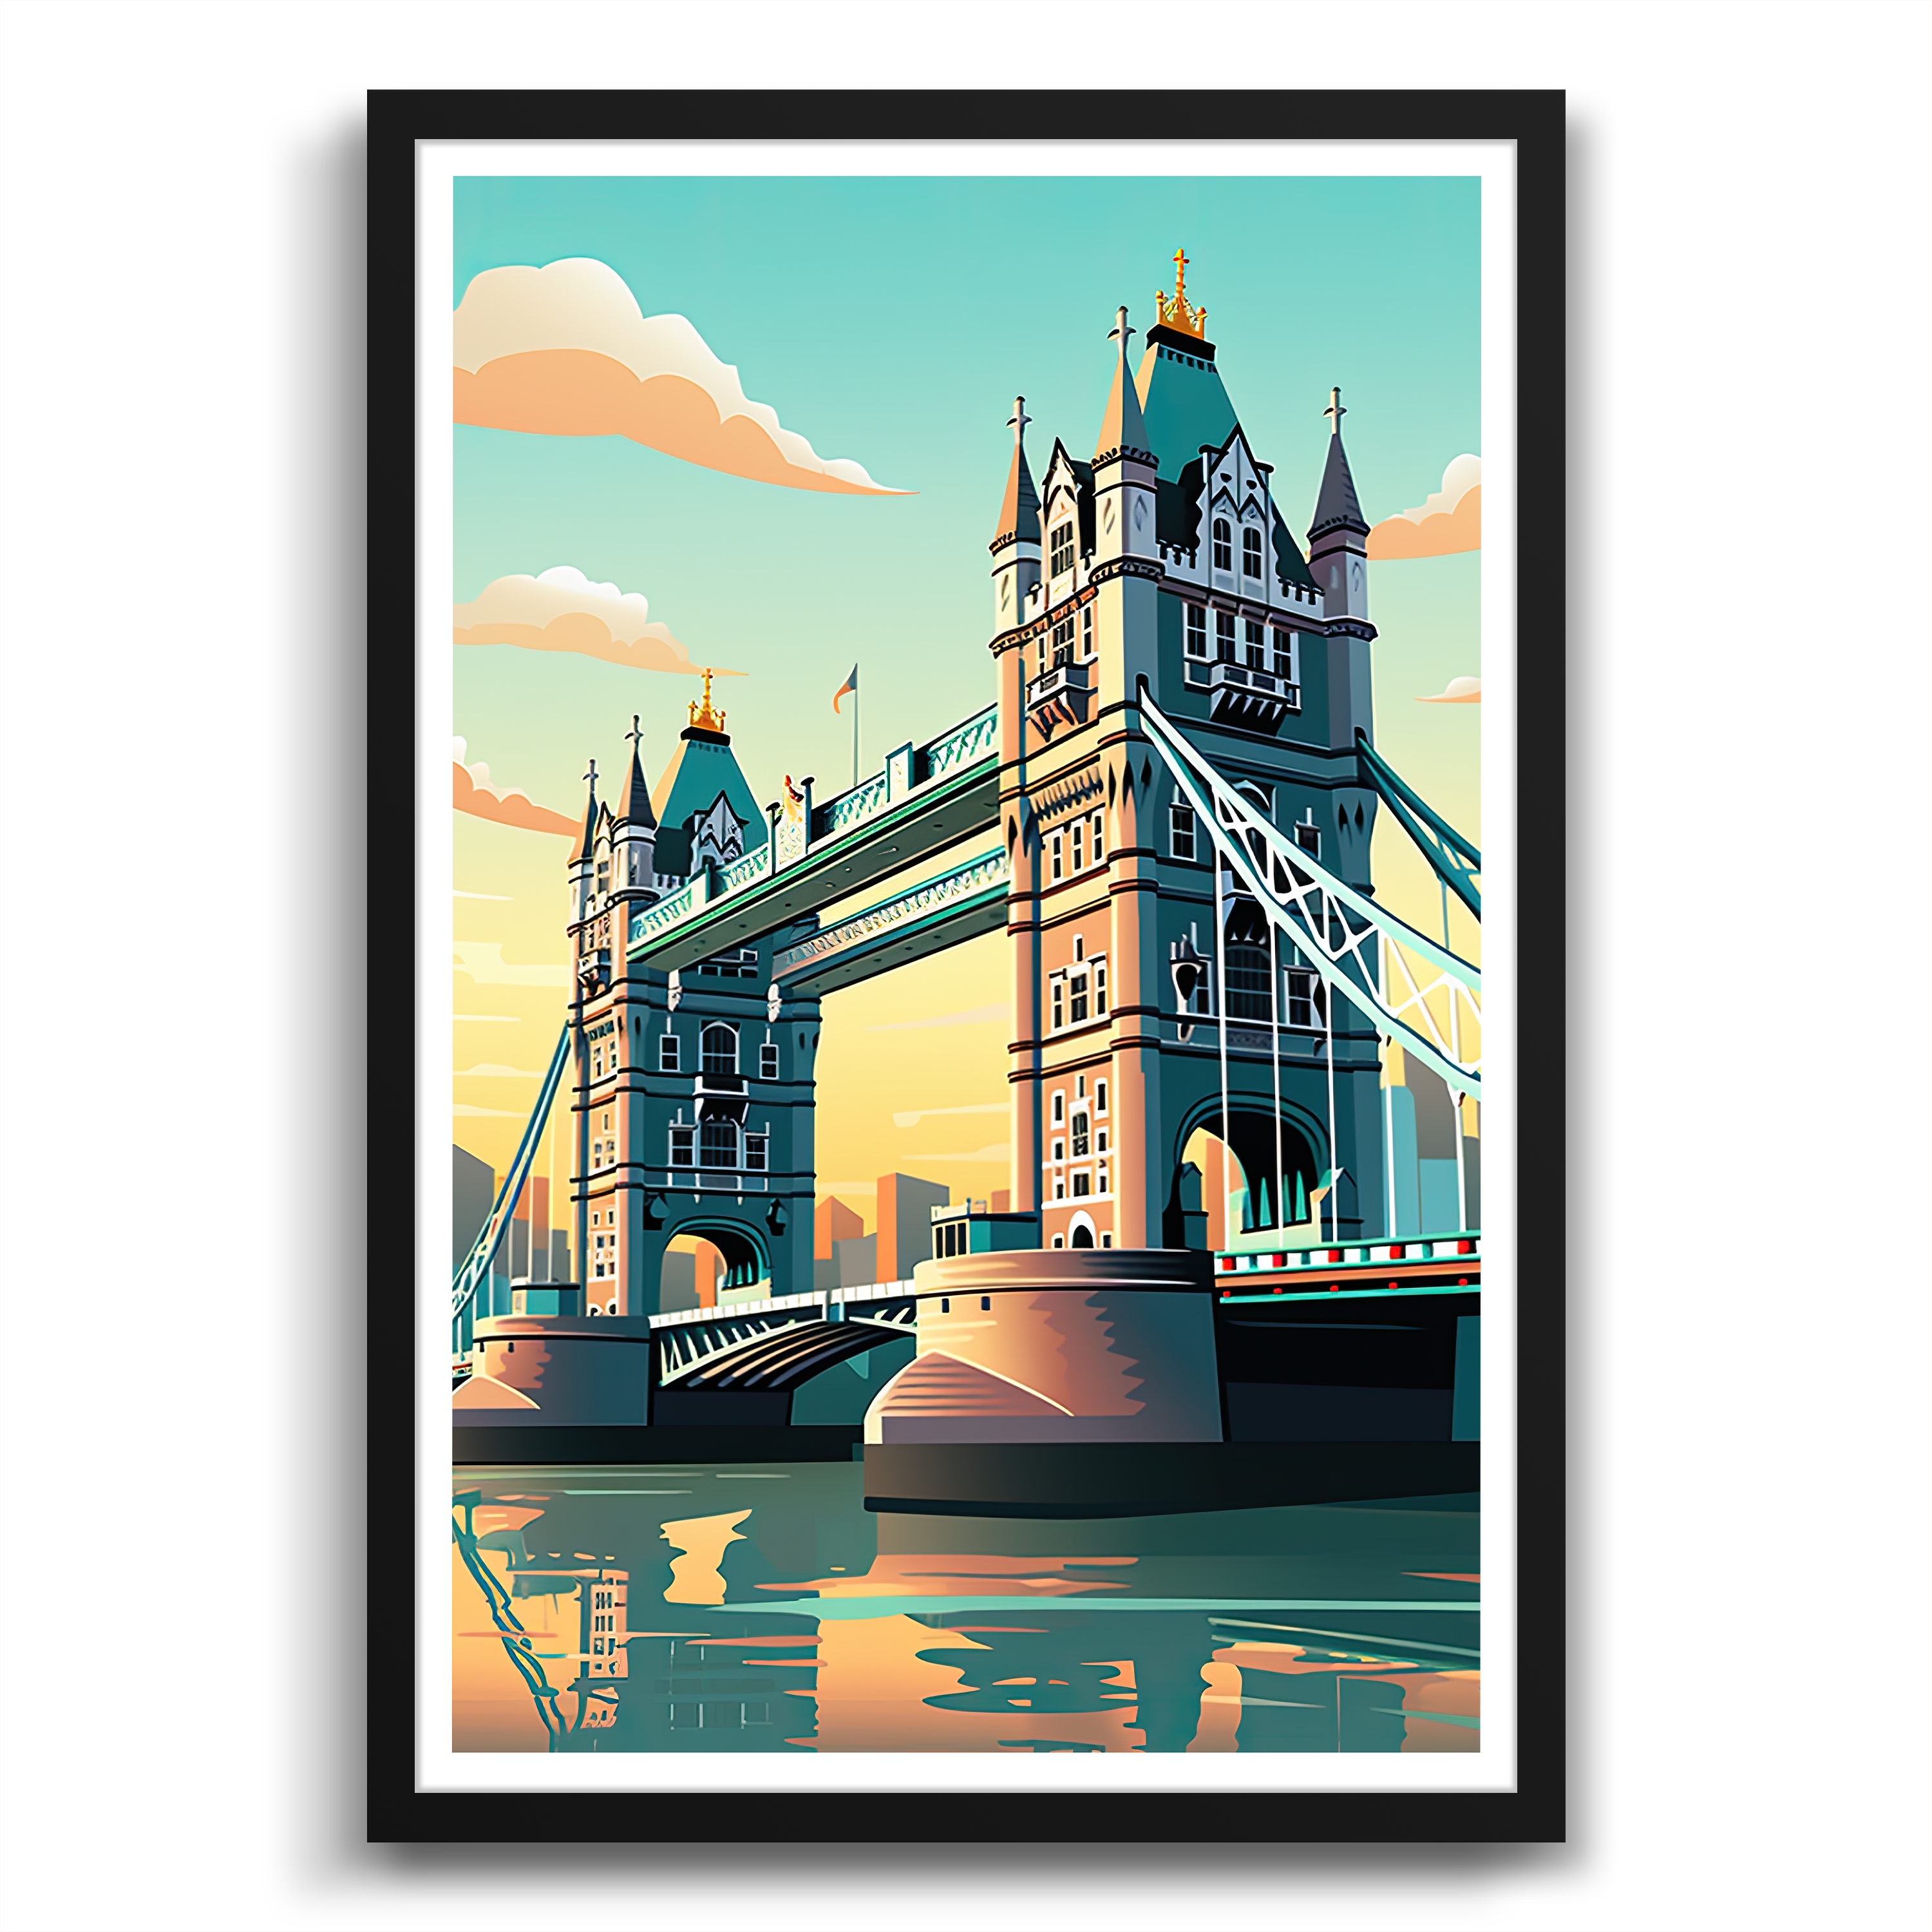 London's Iconic Crossing: Tower Bridge Poster